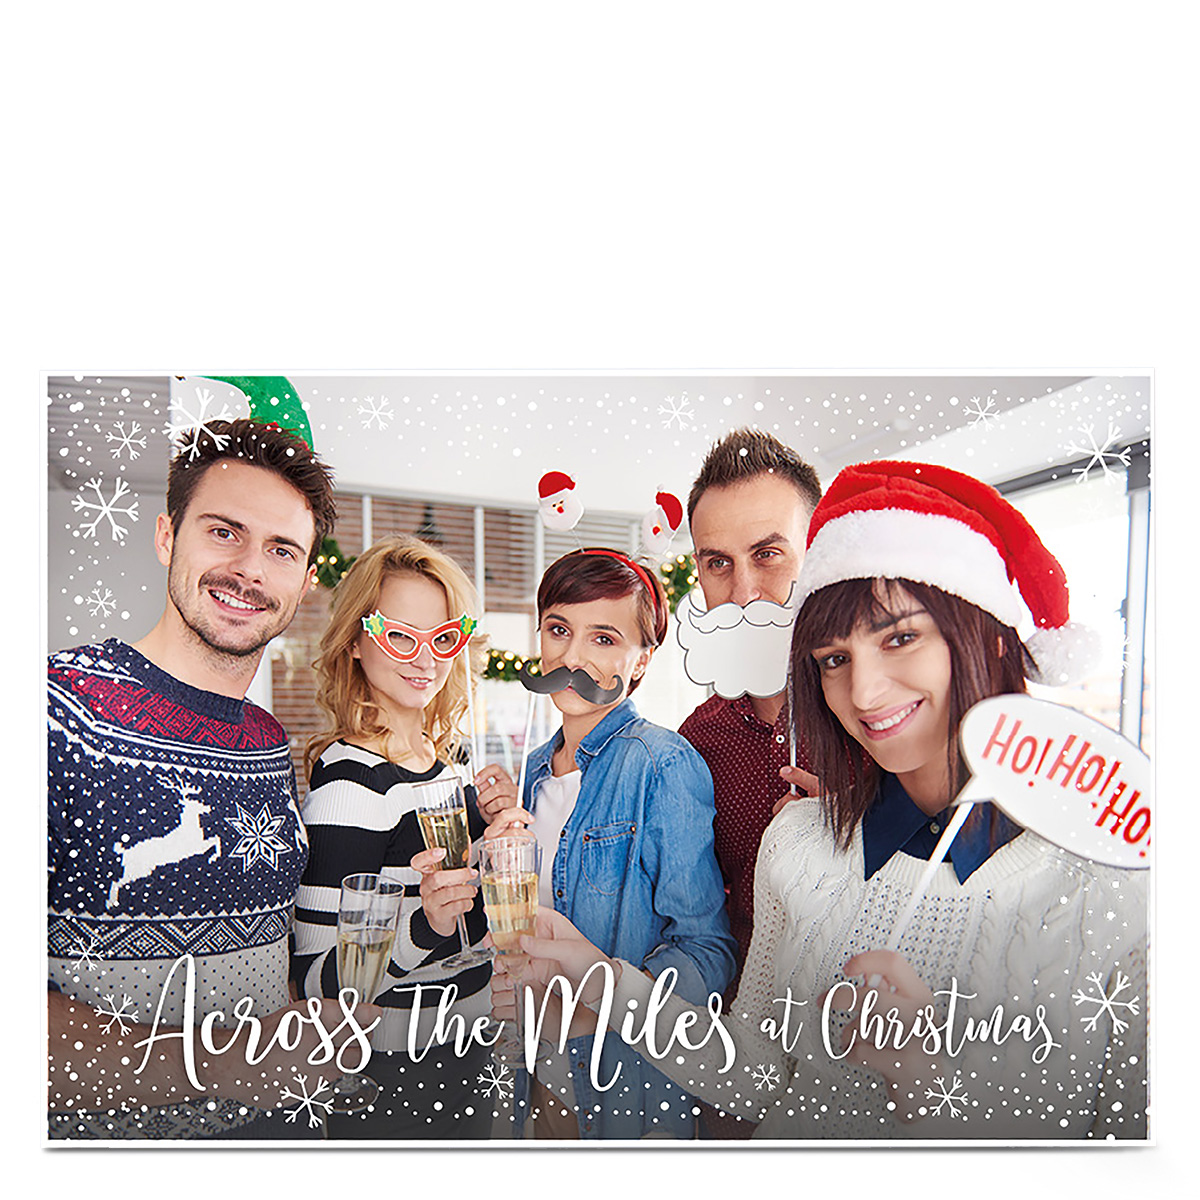 Photo ChristmasÂ Card - Across The Miles at Christmas